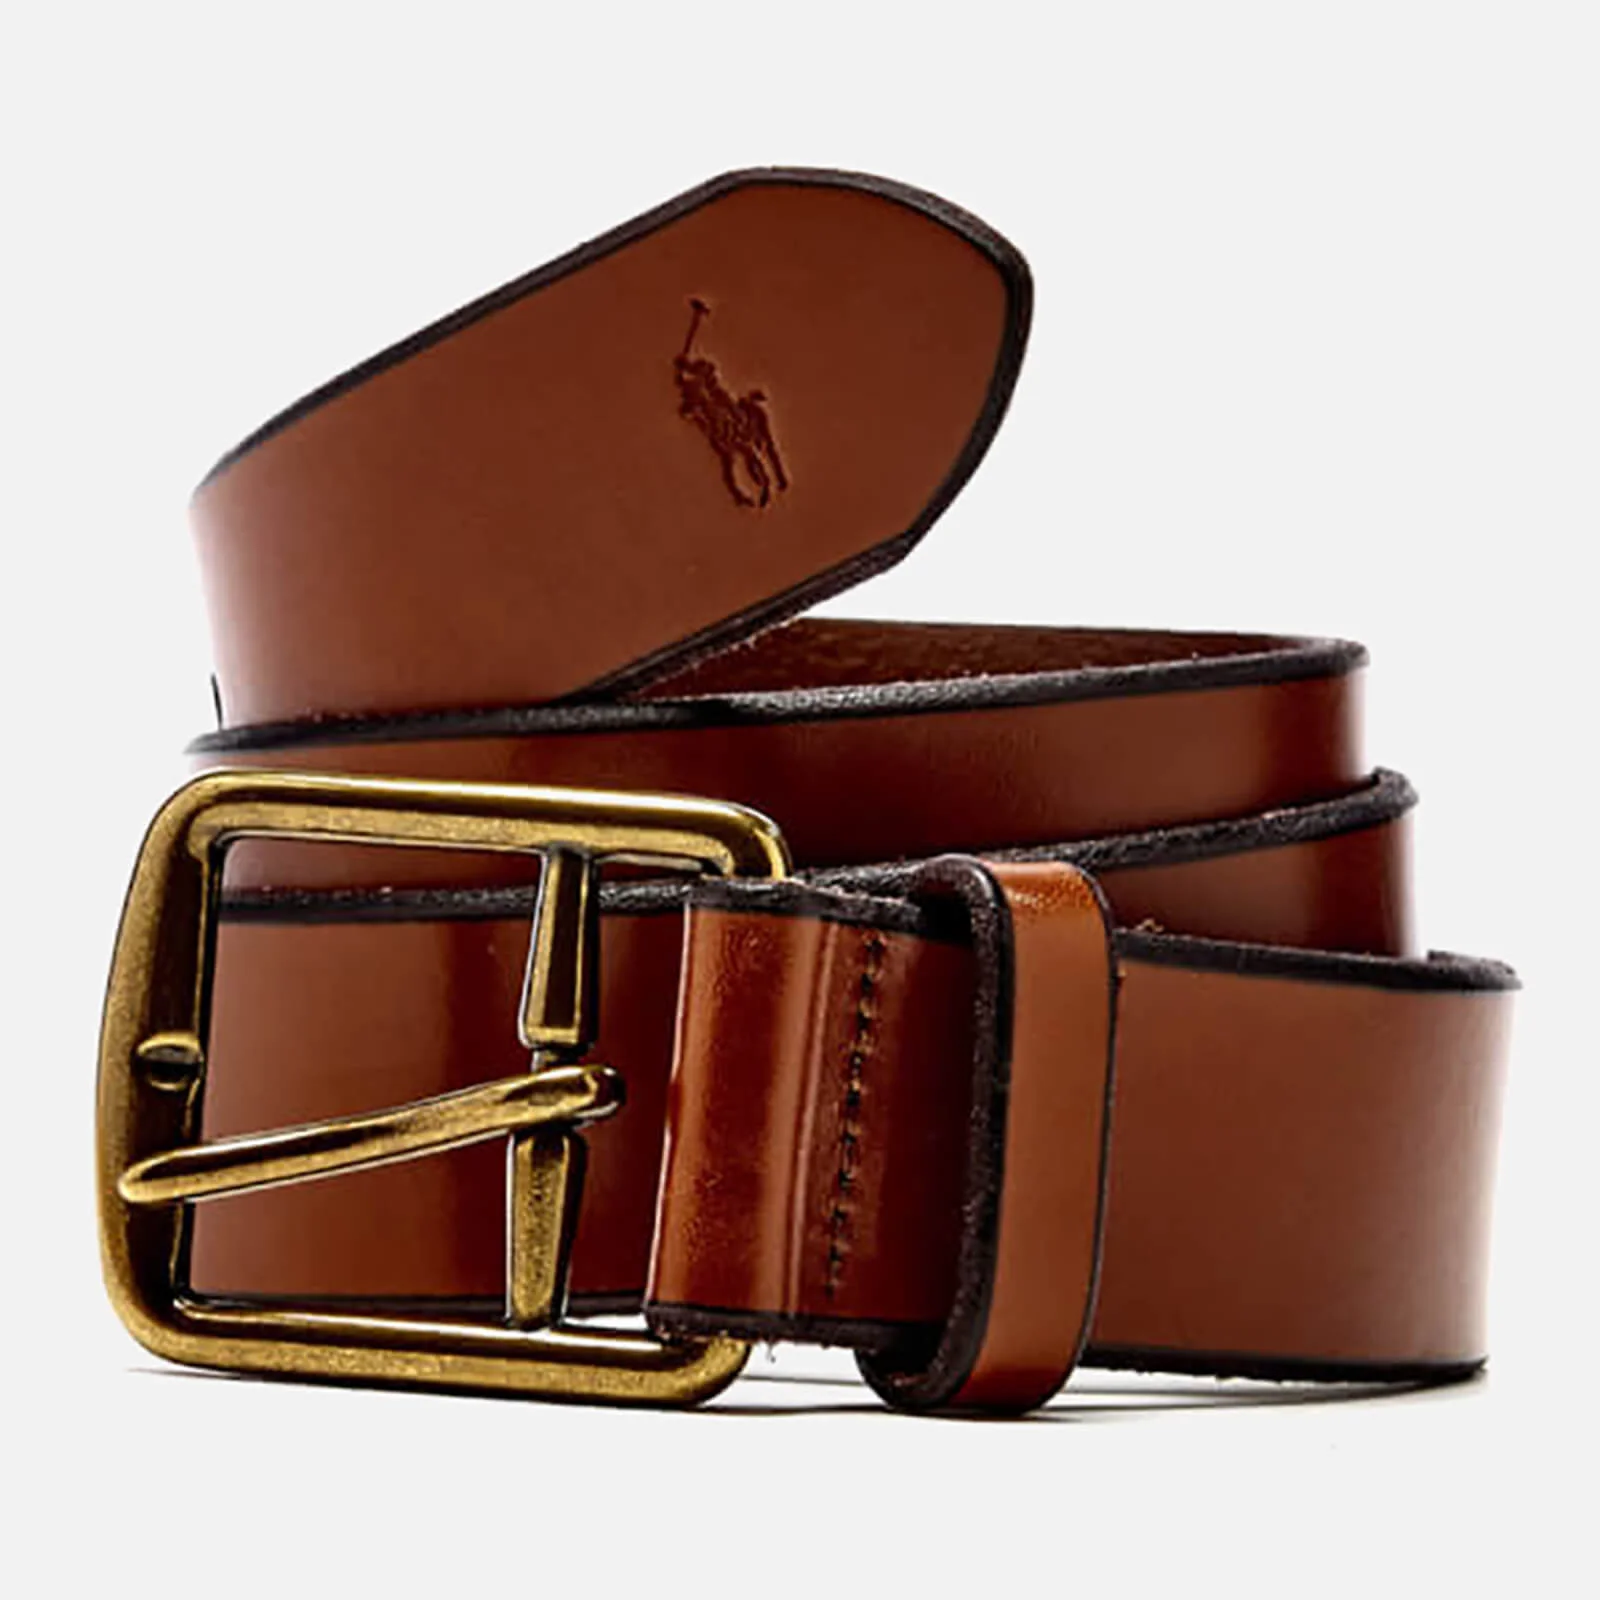 Polo Ralph Lauren Men's Saddle Leather Belt - Saddle Image 1